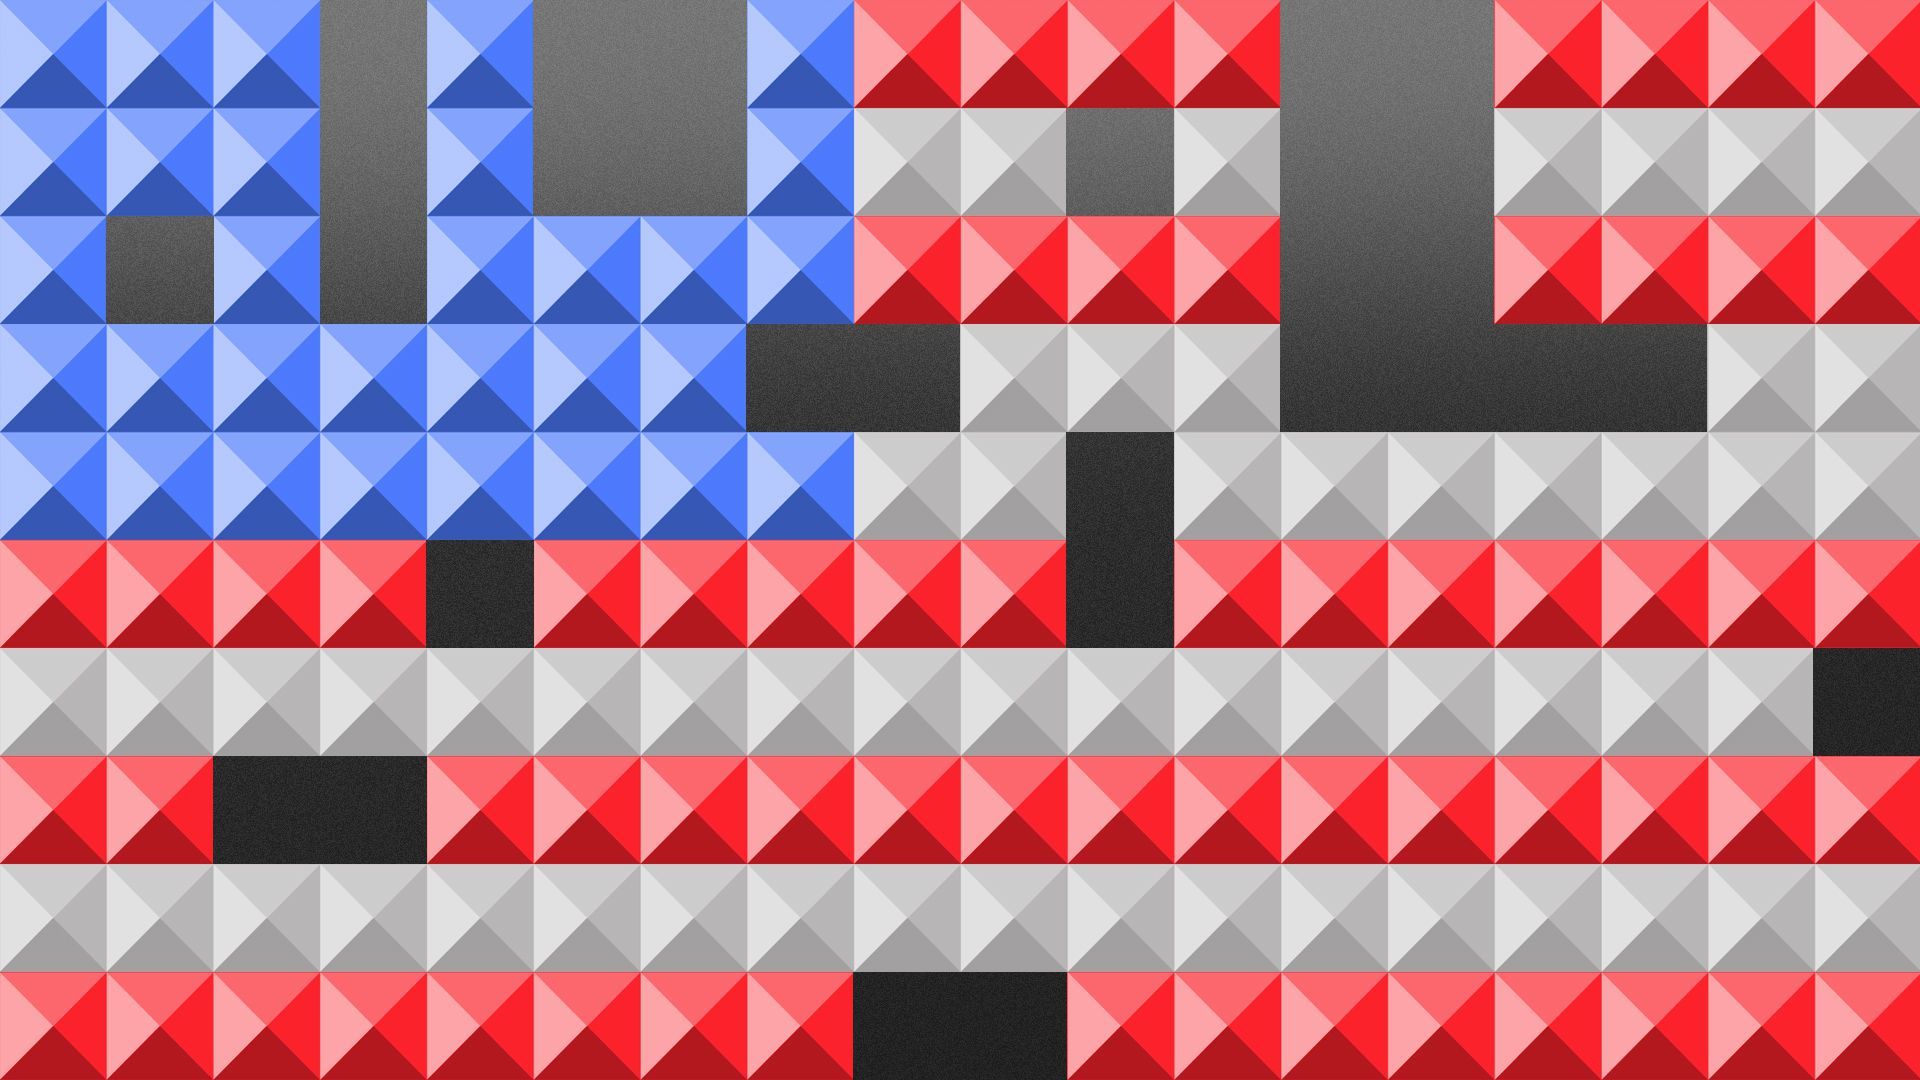 Illustration of a Tetris-like game shaped like the American flag